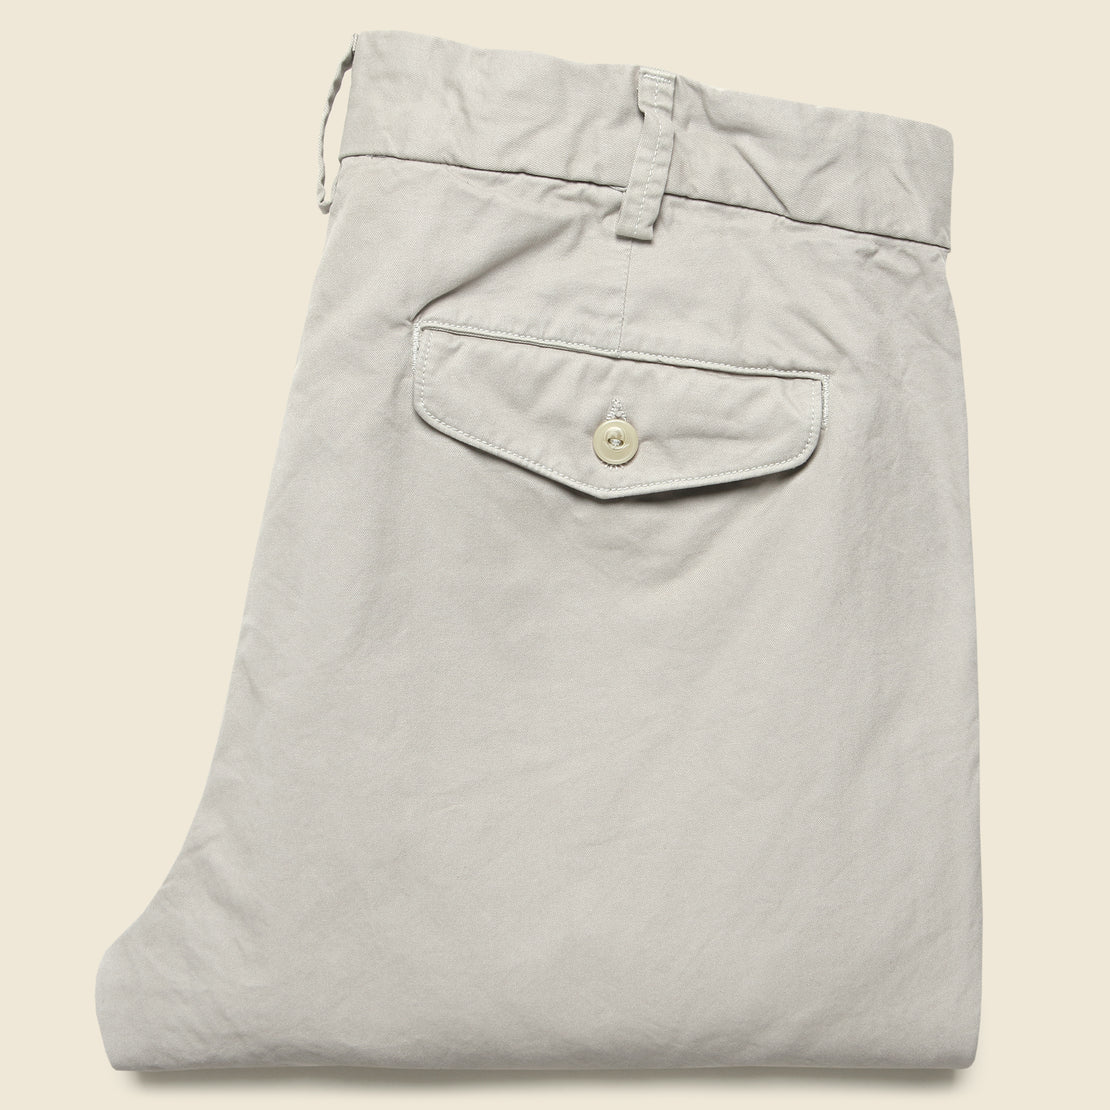 Twill Original Chino - Cement - Save Khaki - STAG Provisions - Pants - Twill